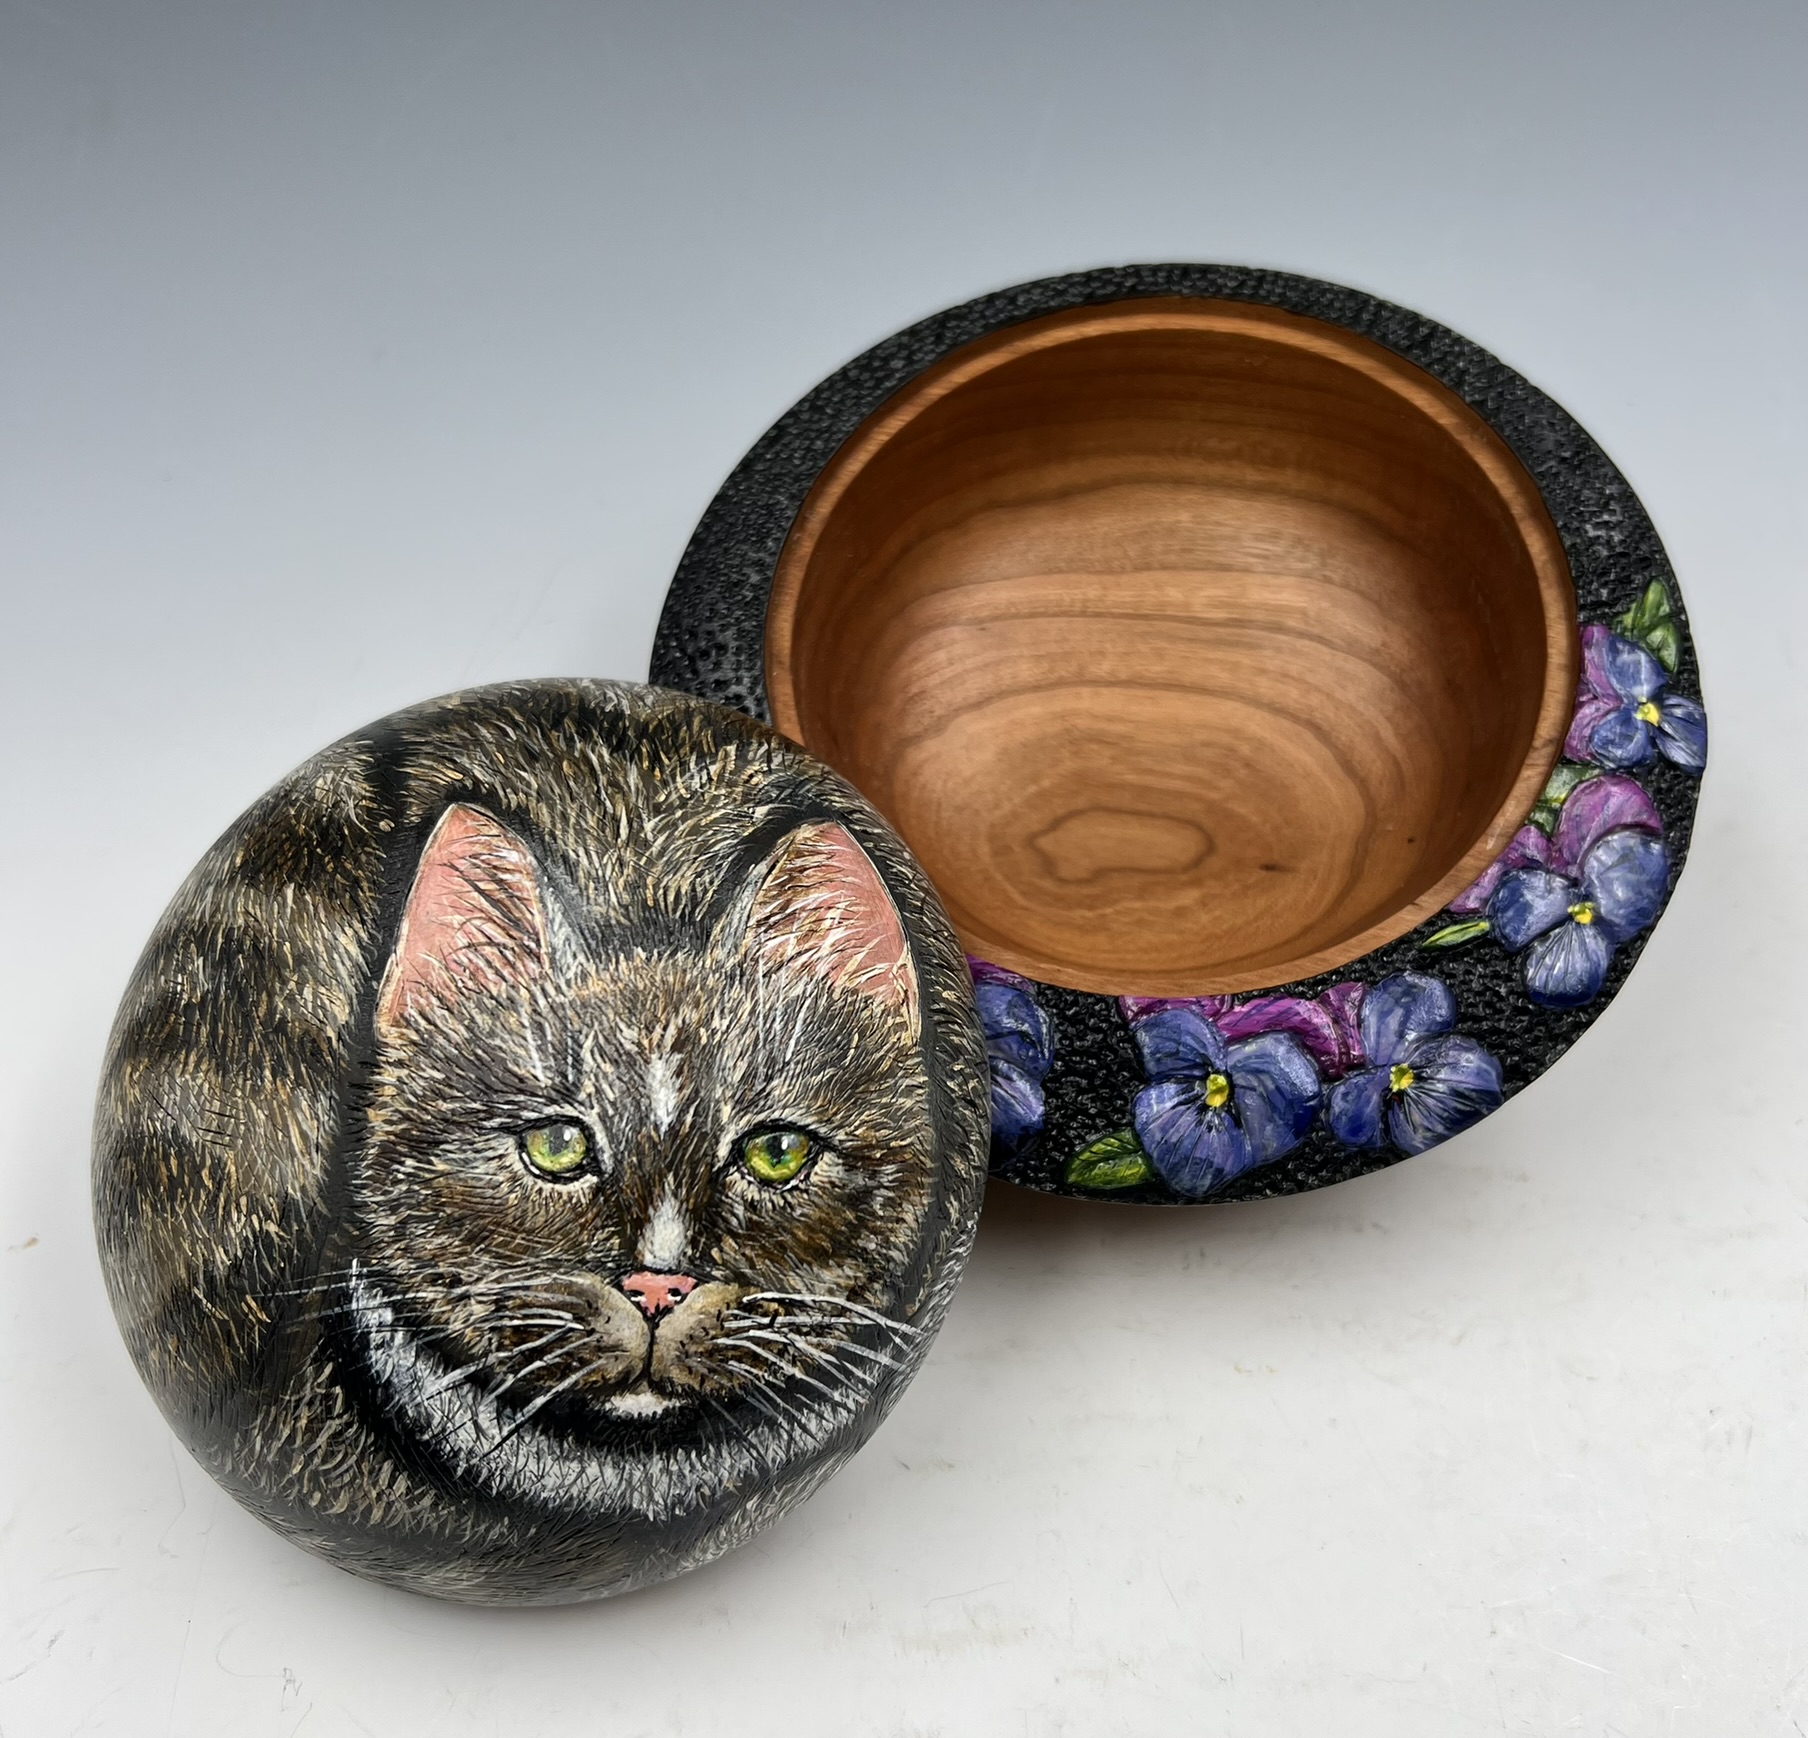 Tabby-cat box made of Cherry wood